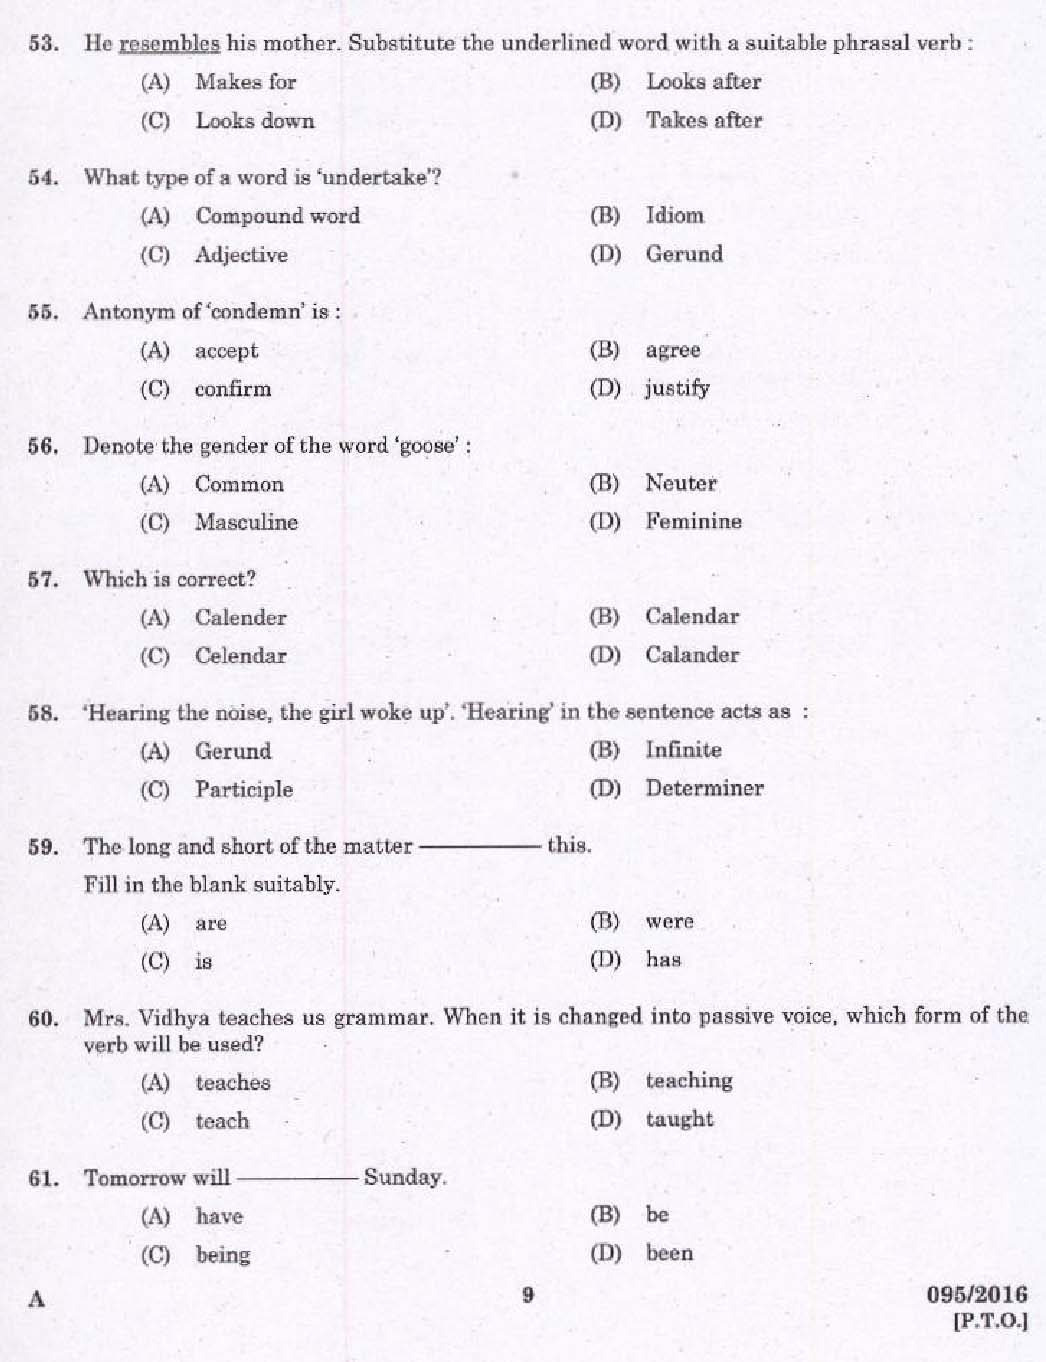 Kerala PSC Telephone Operator Exam Question Code 0952016 7